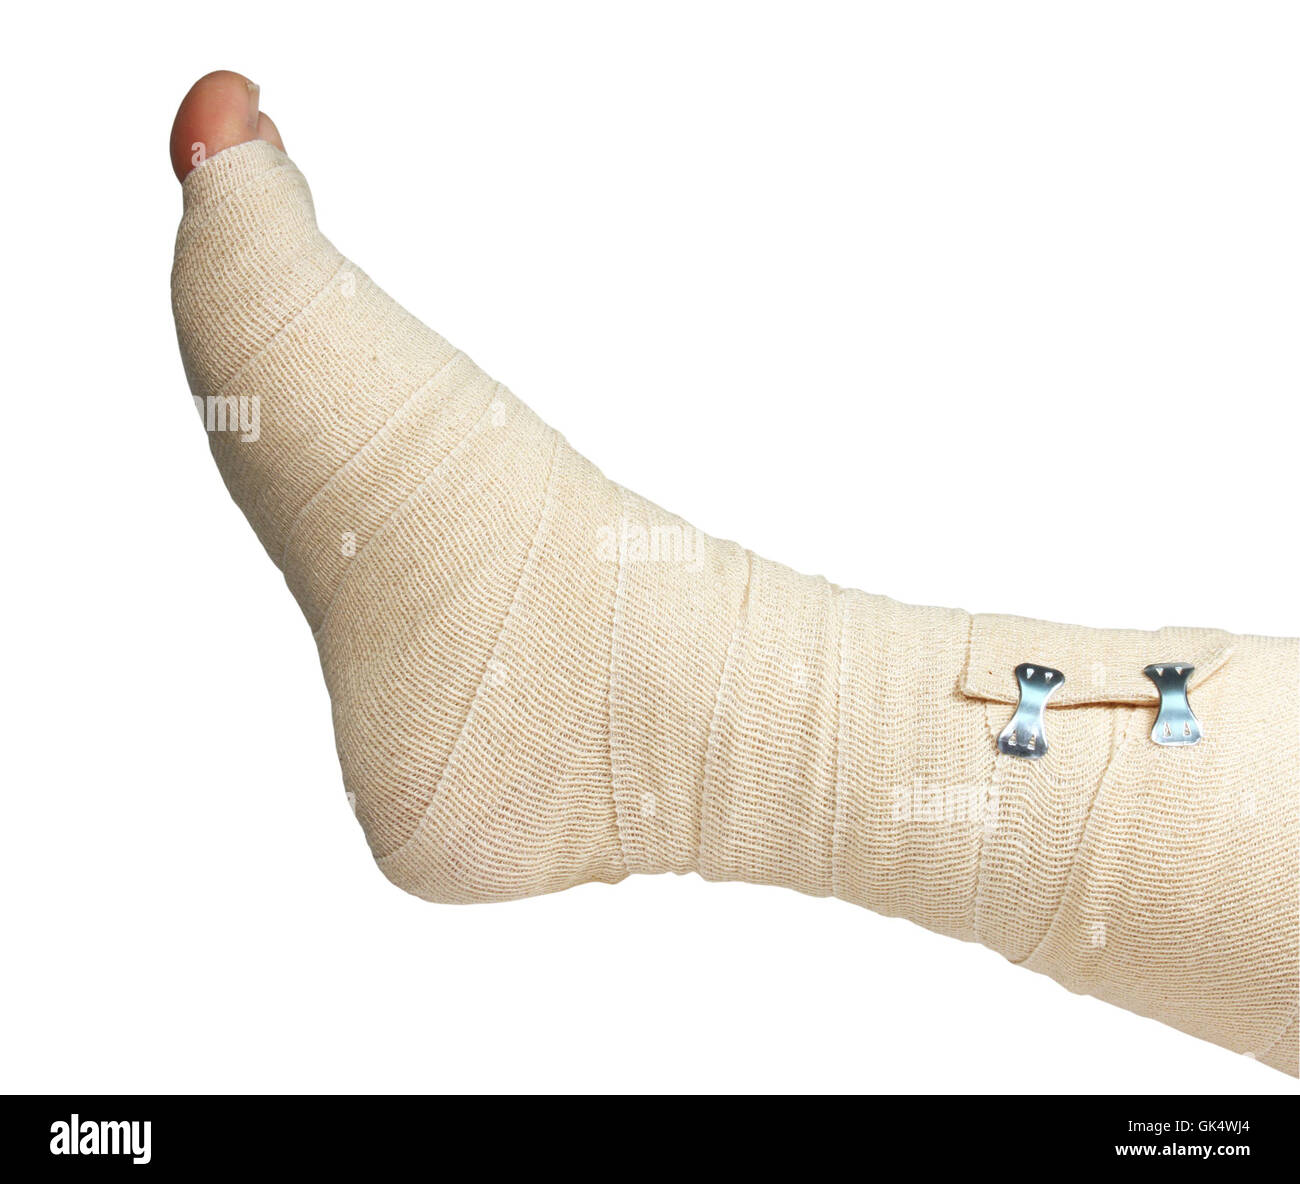 Fuss Zehen bandage Stockfotografie - Alamy